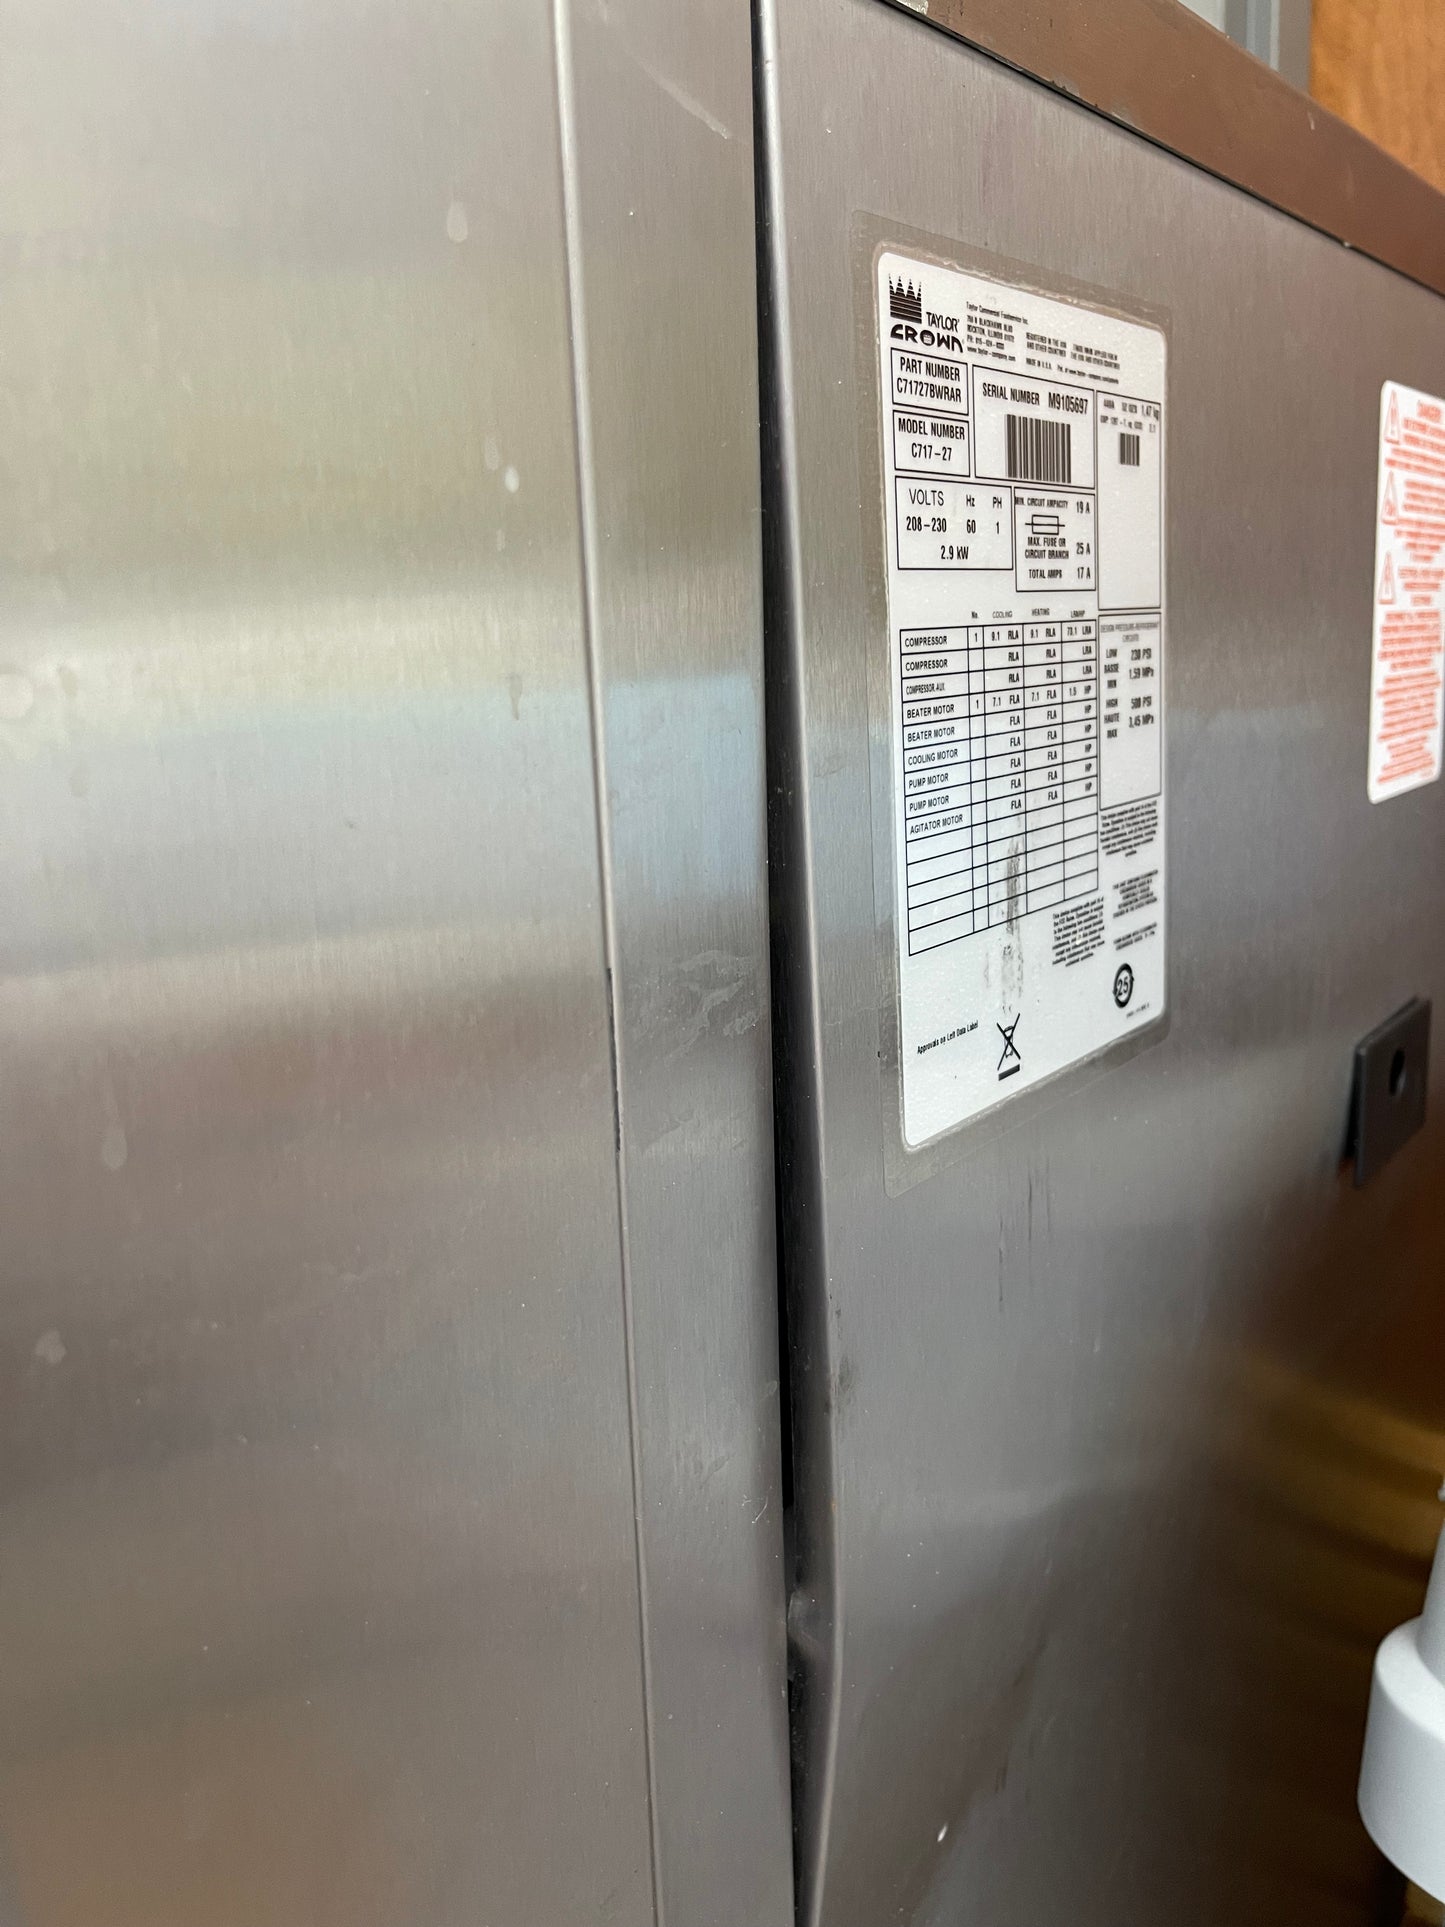 2019 Taylor C717-27 Soft Serve Freezer Twist Air Cooled Ice Cream Machine 1-Phase M9105697 - JS